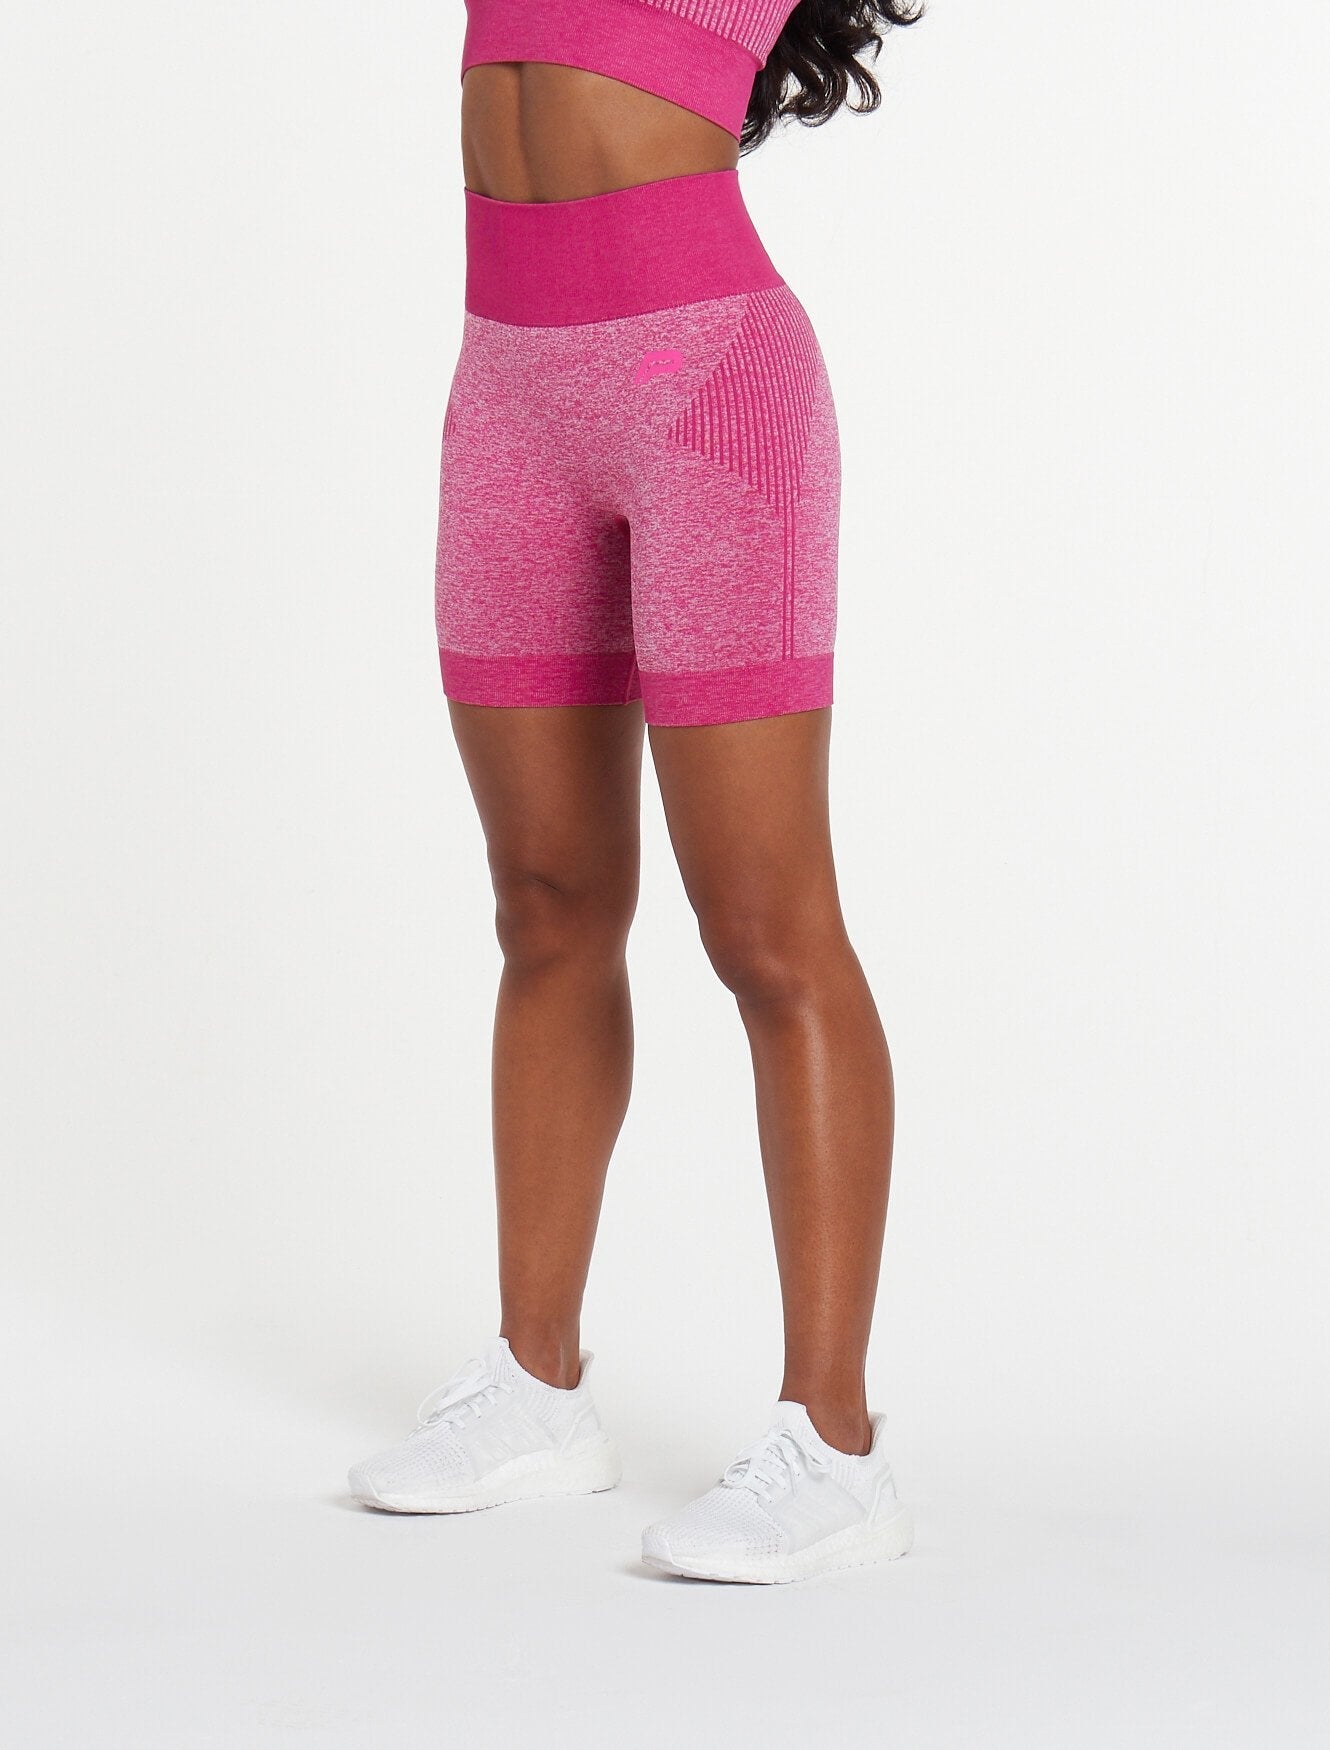 ADAPT Seamless Shorts / Power Pink Pursue Fitness 2